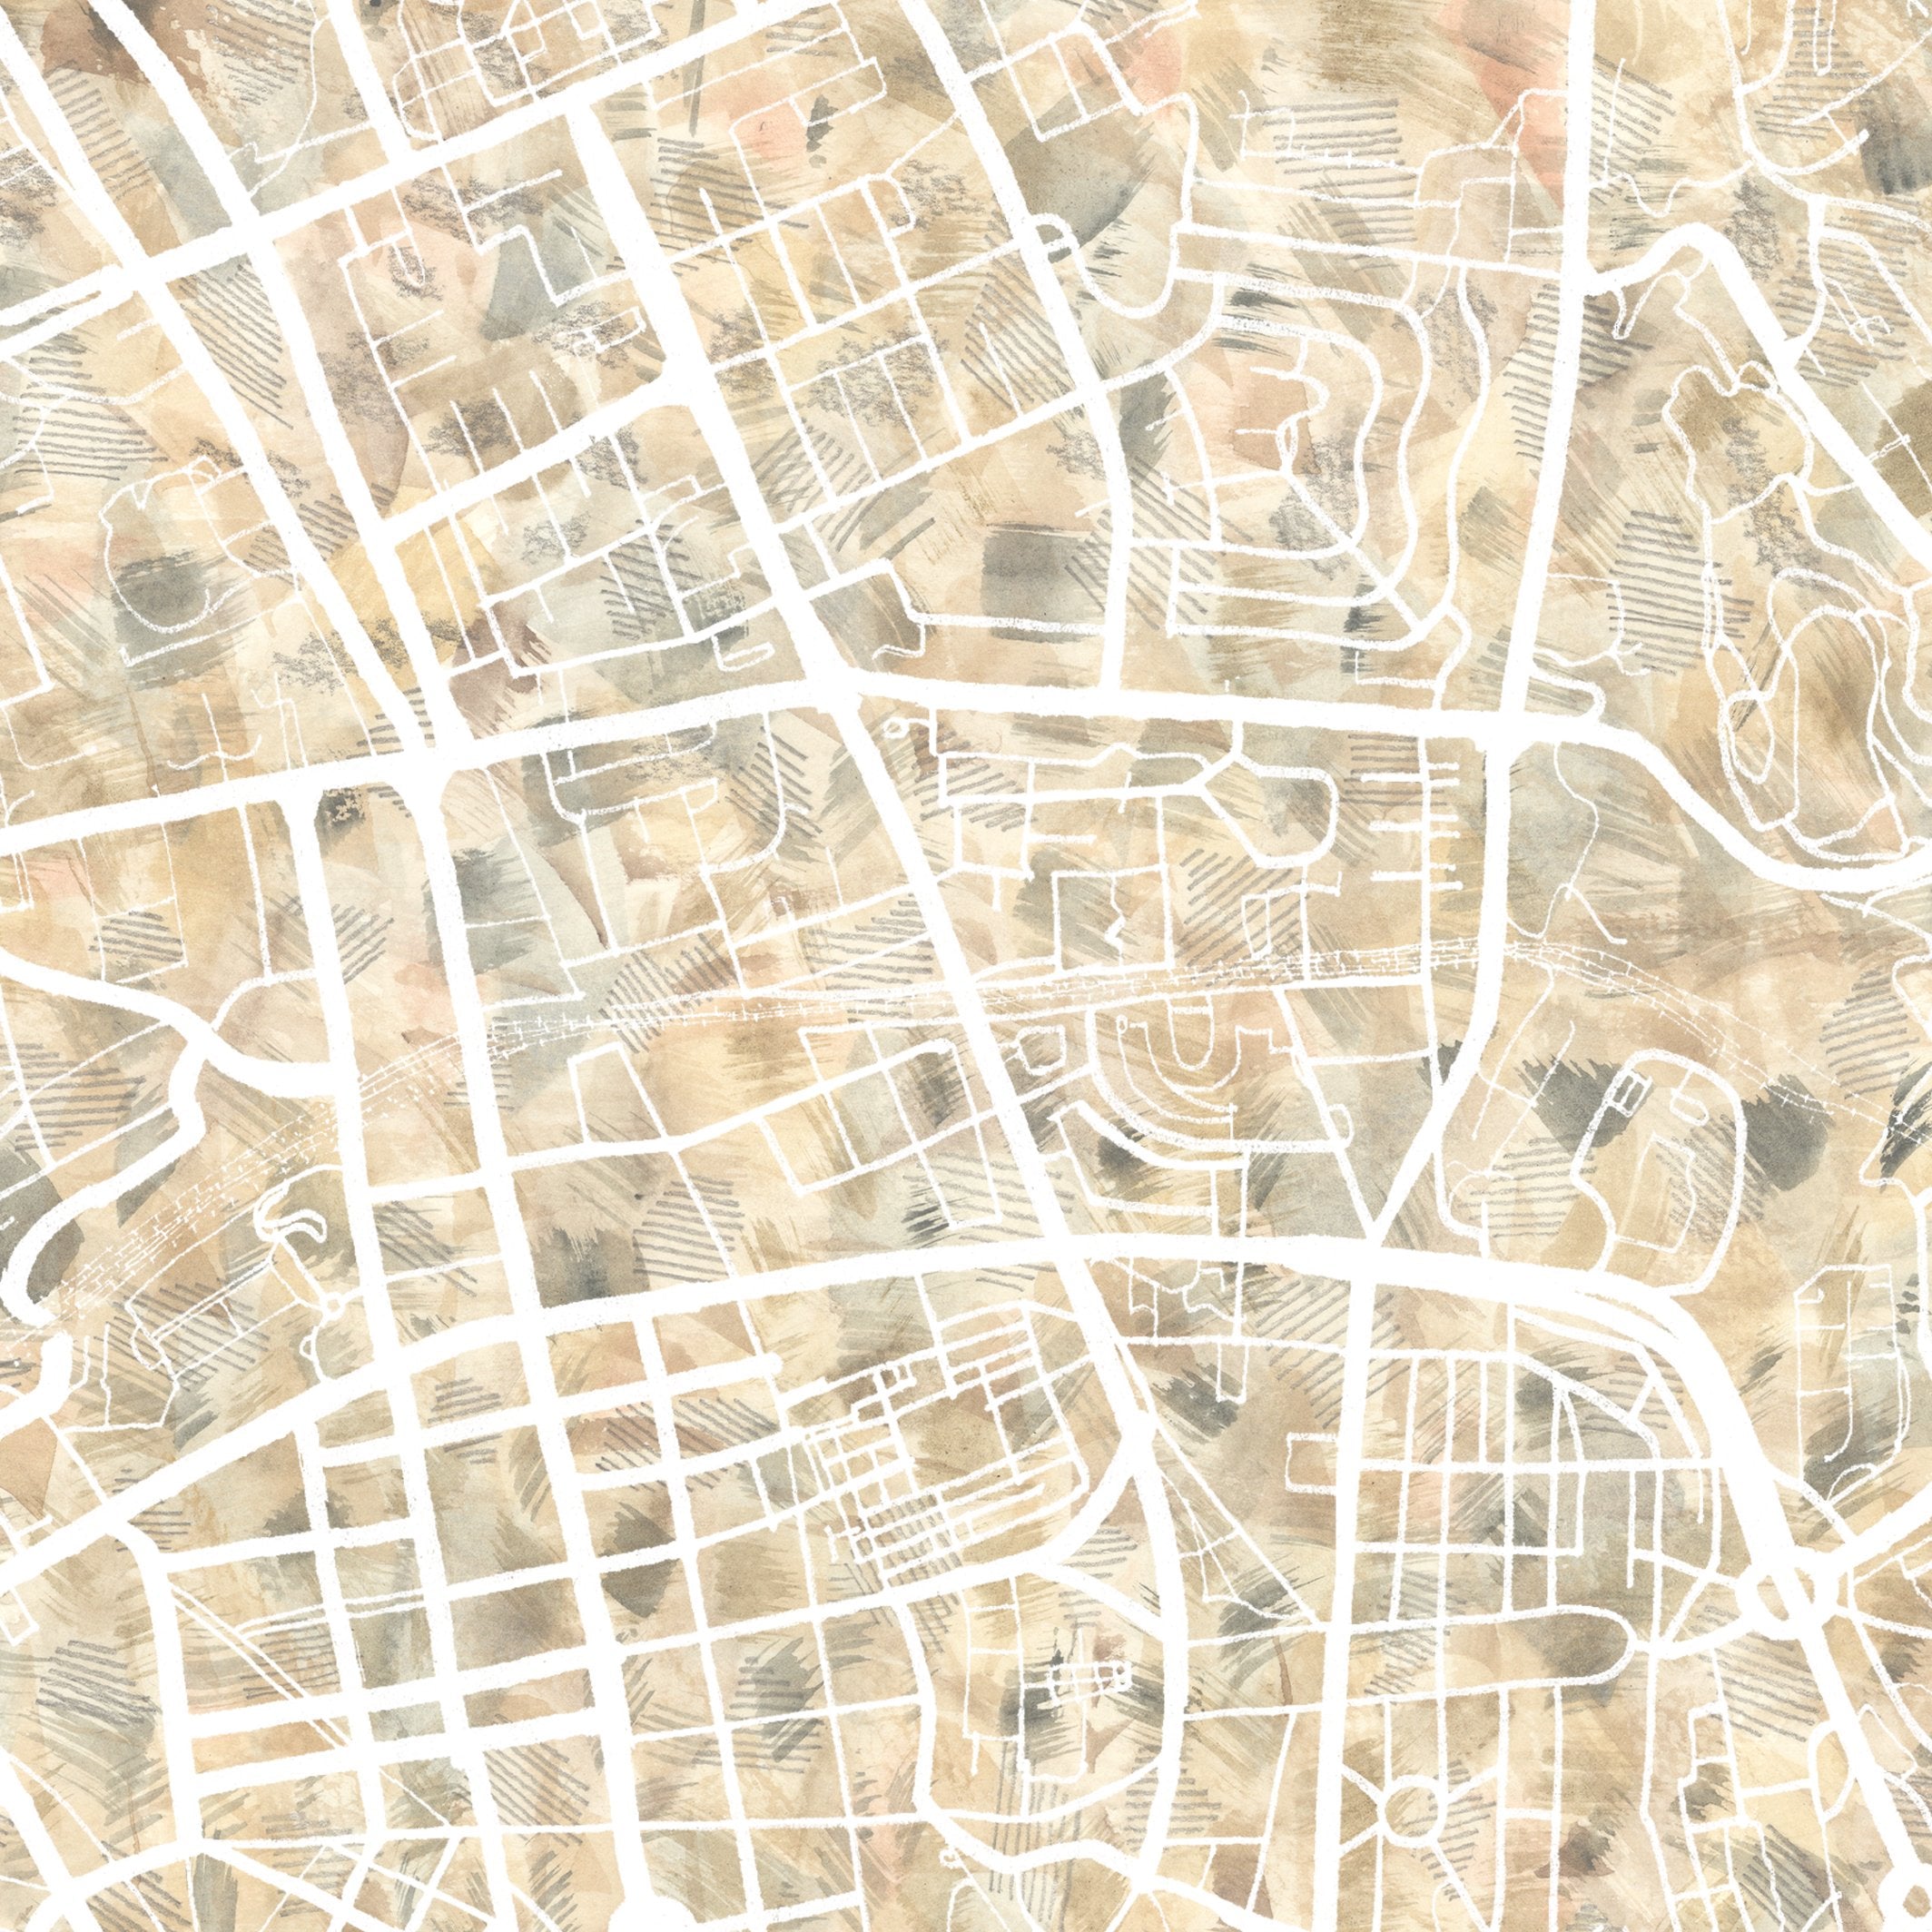 LISBON Urban Fabrics City Map: PRINT